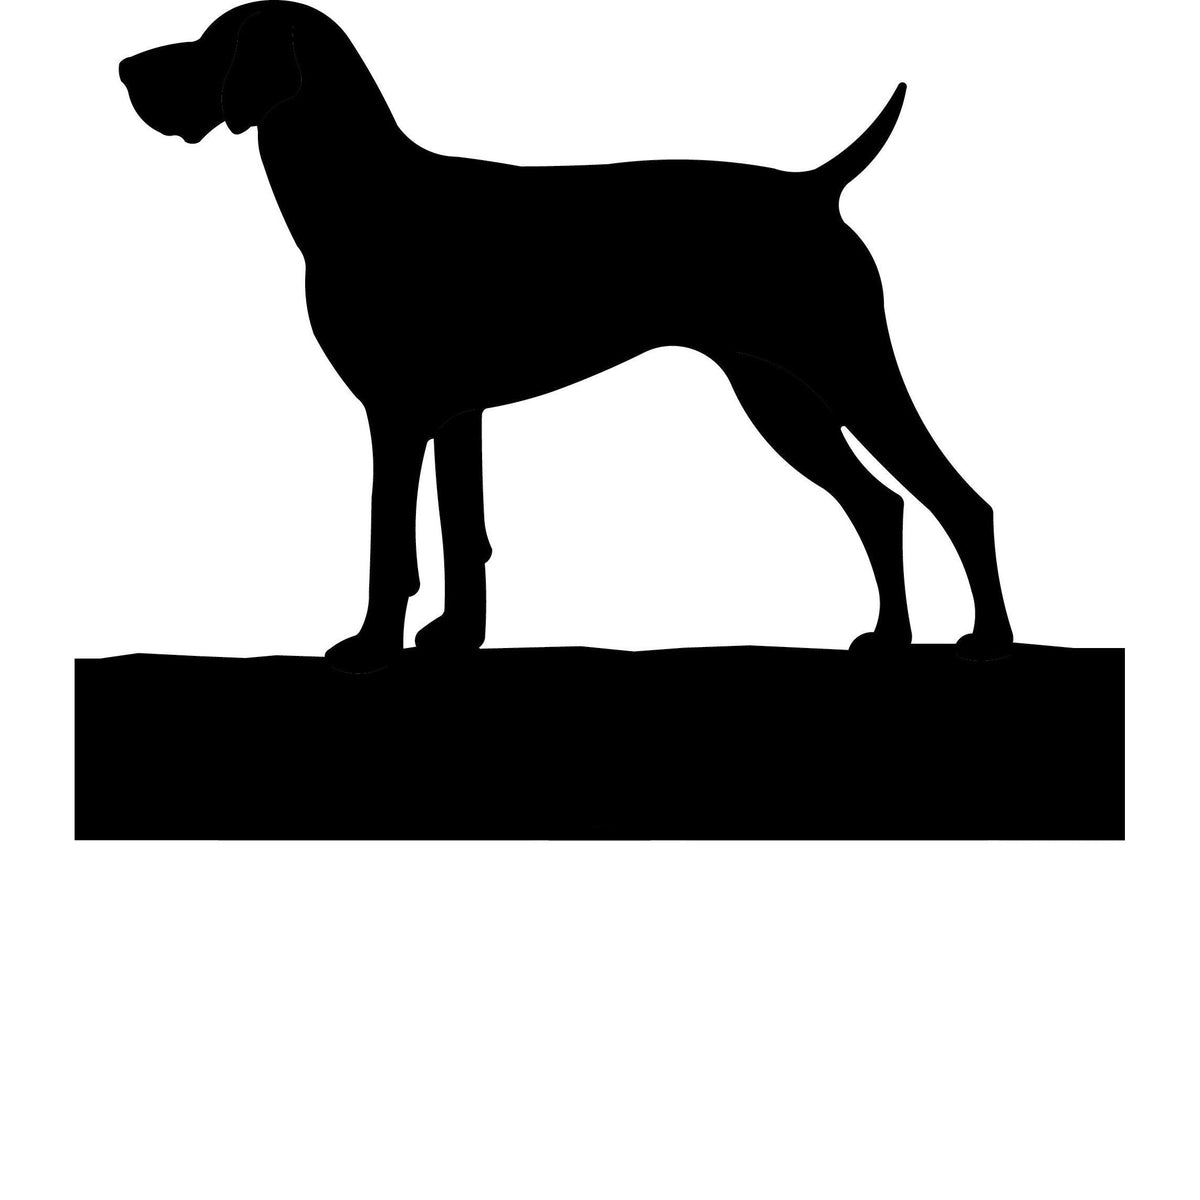 German Shorthaired Pointer dog address stake